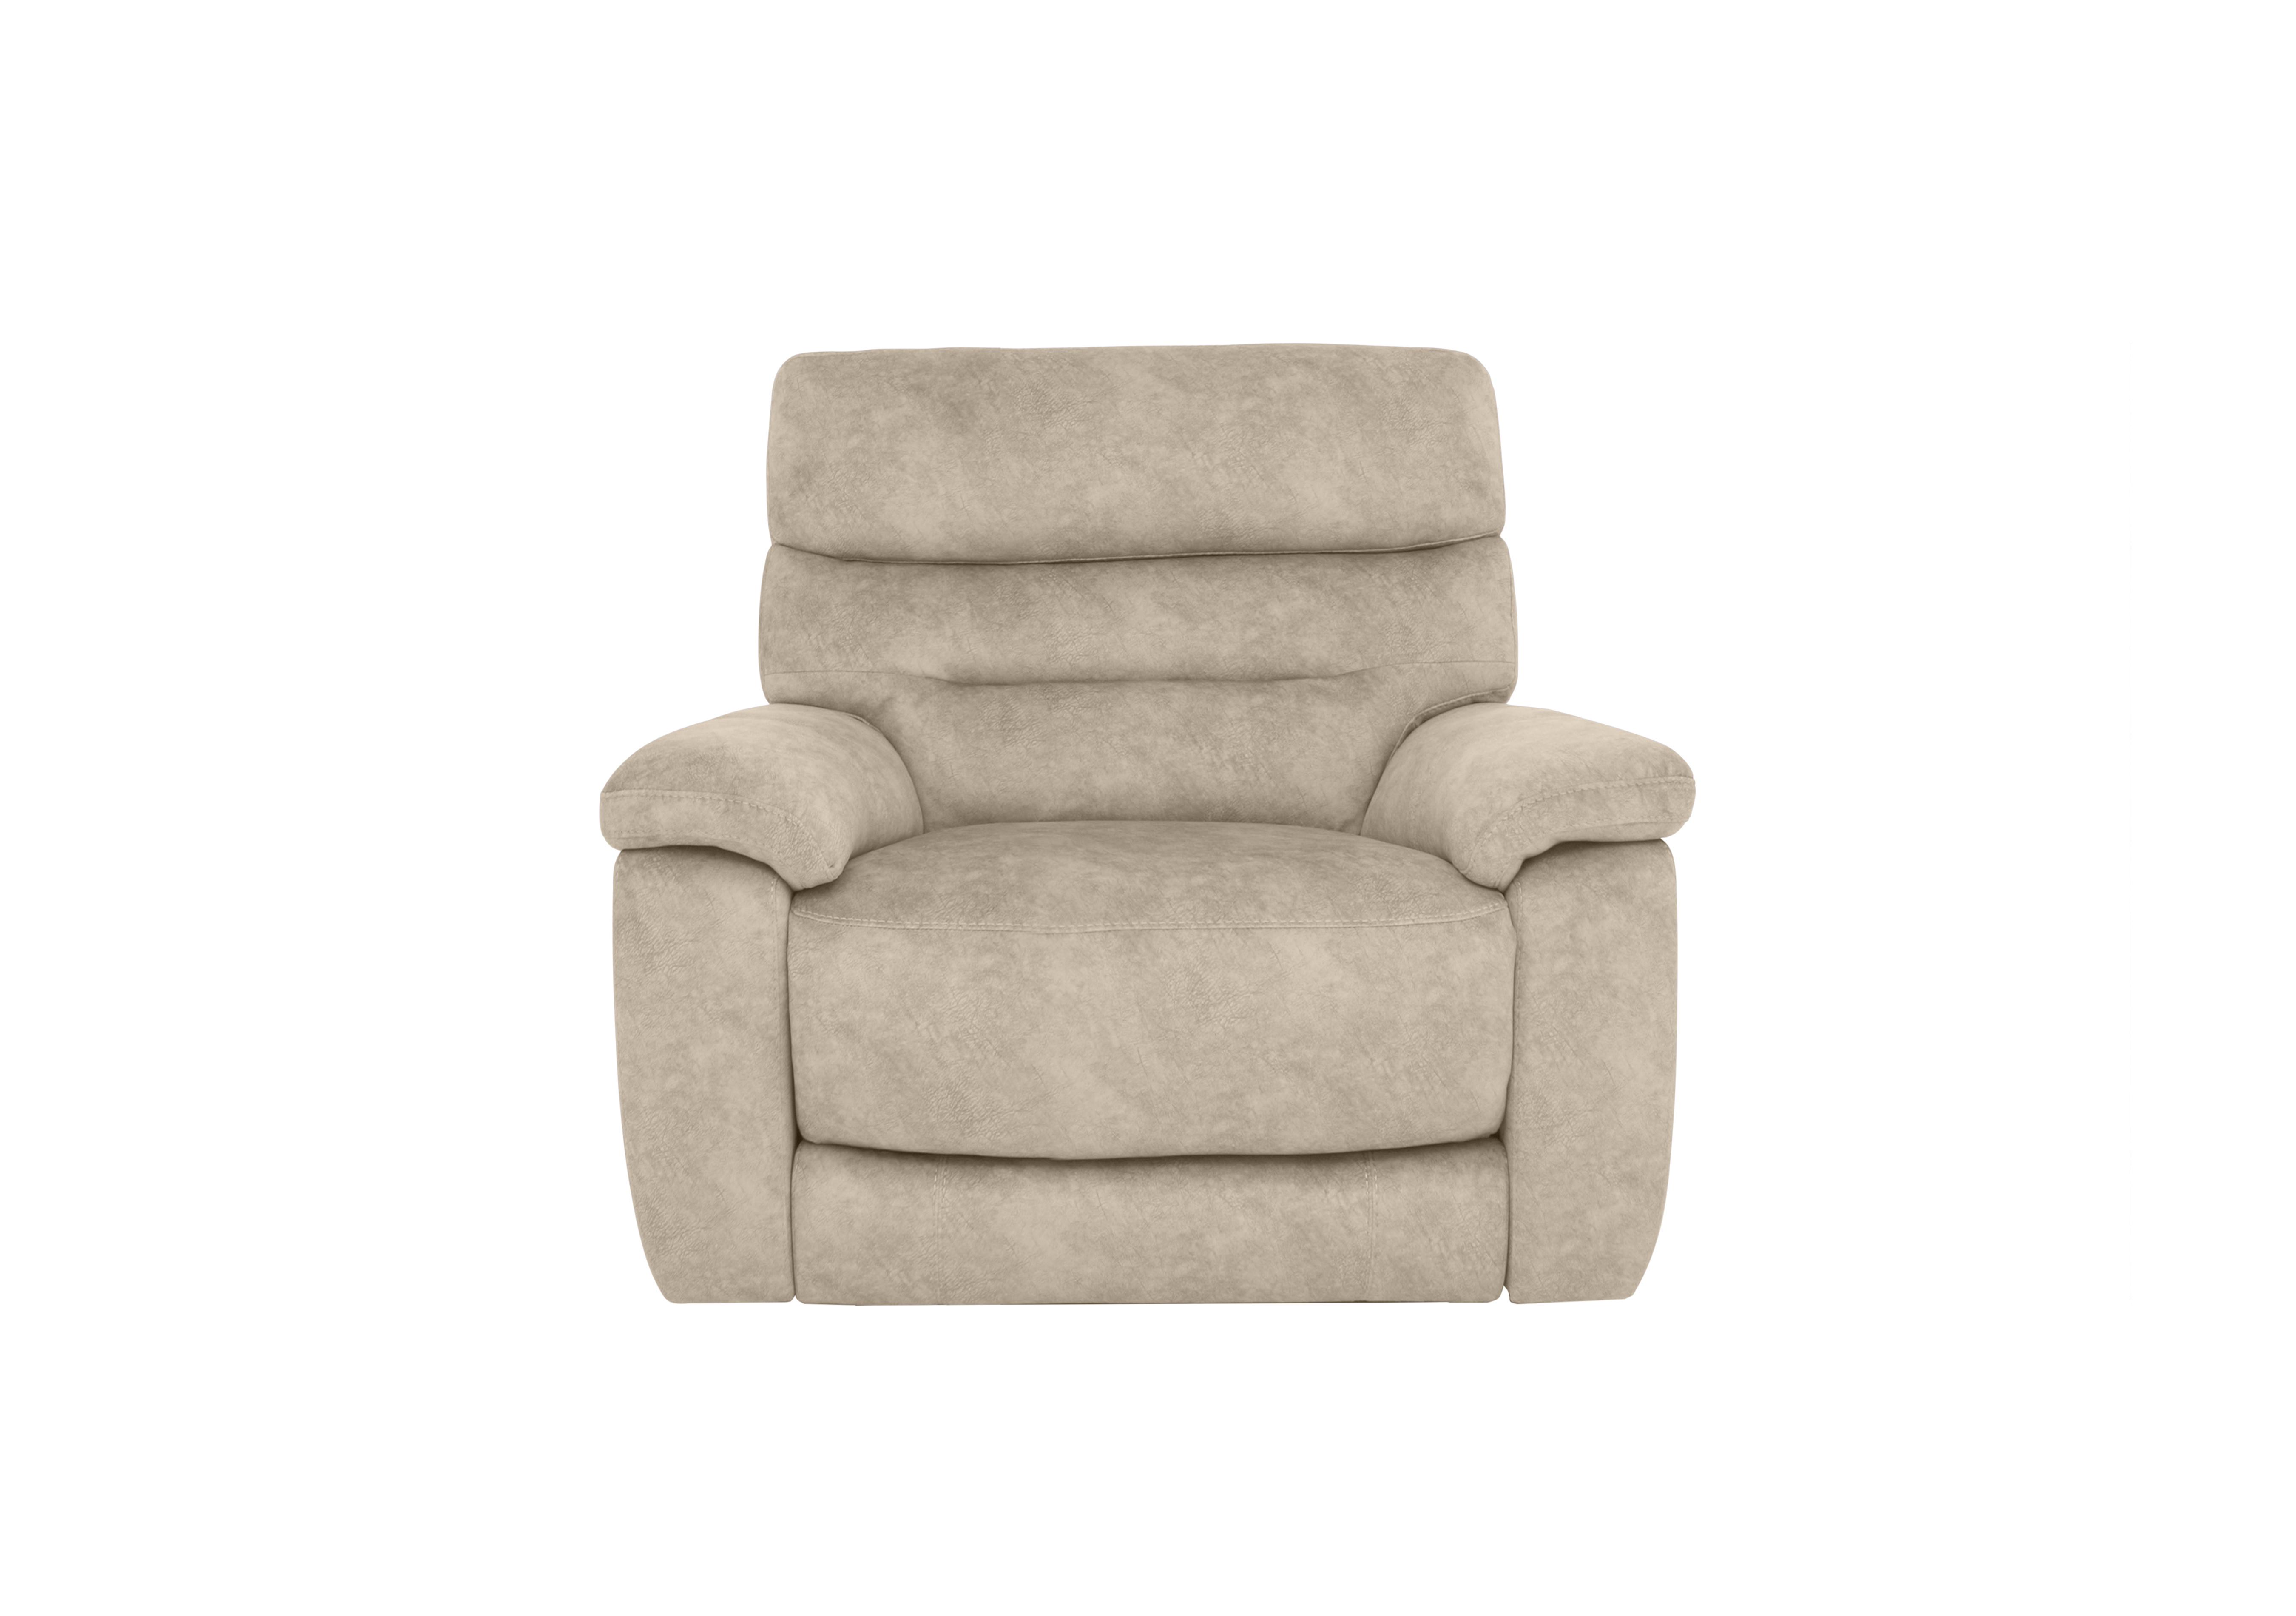 Nimbus Fabric Power Recliner Chair with Power Headrest in Bfa-Bnn-R26 Cream on Furniture Village